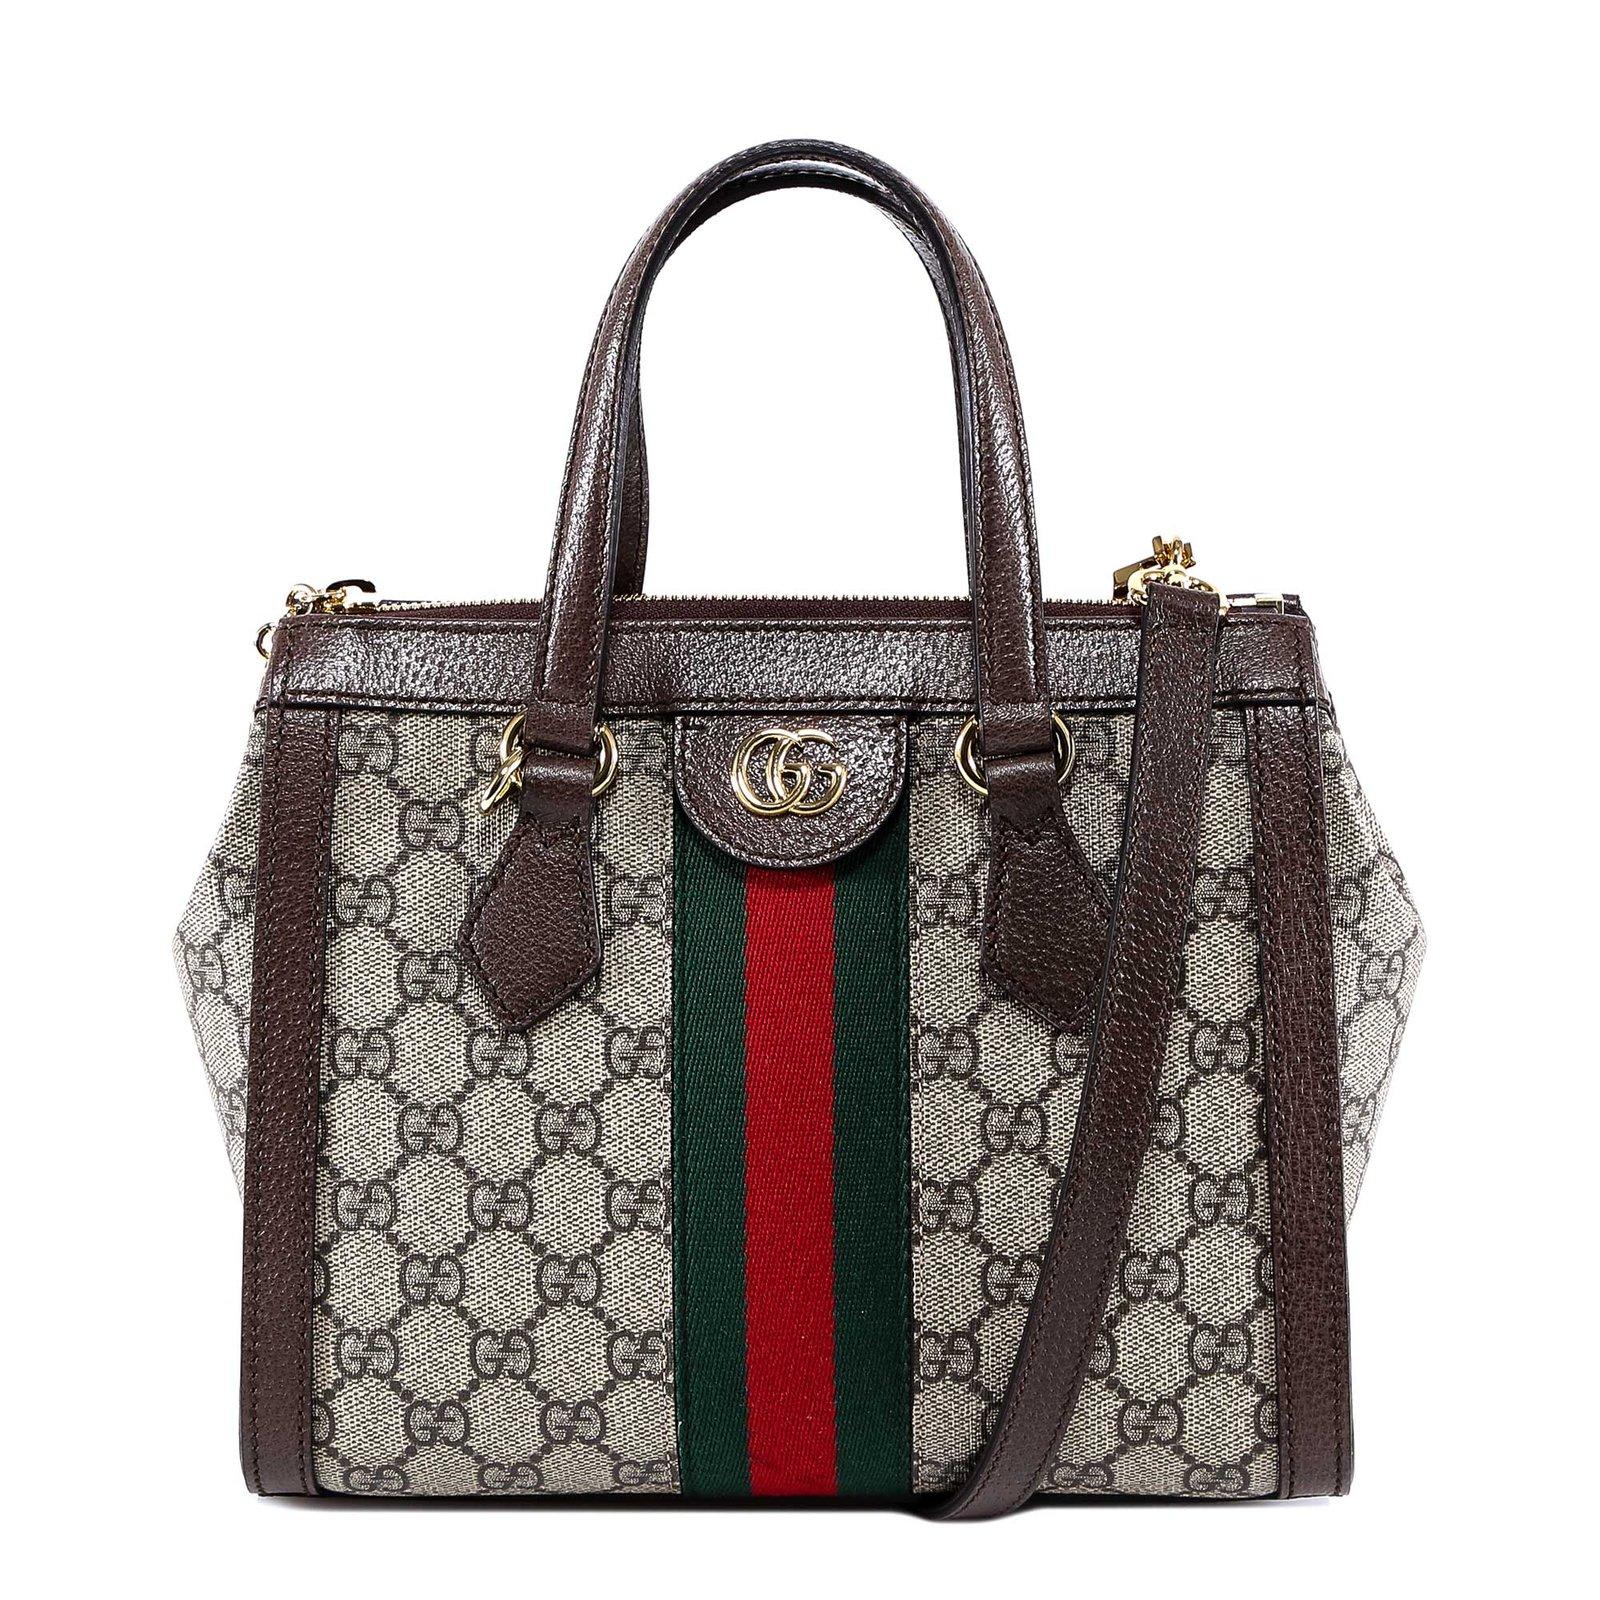 Gucci Ophidia Small Gg Tote Bag In Acero